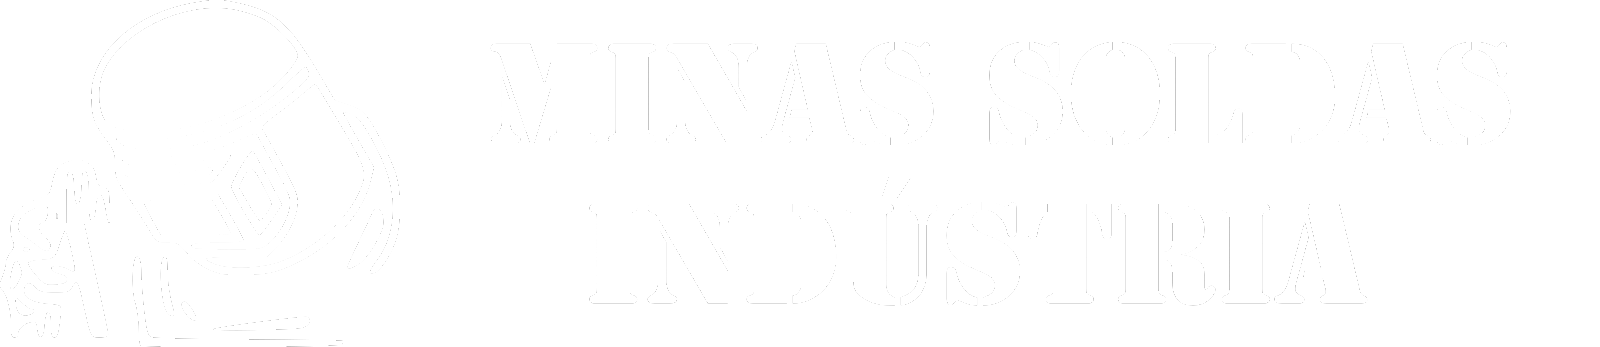 nicrosoldas-logo